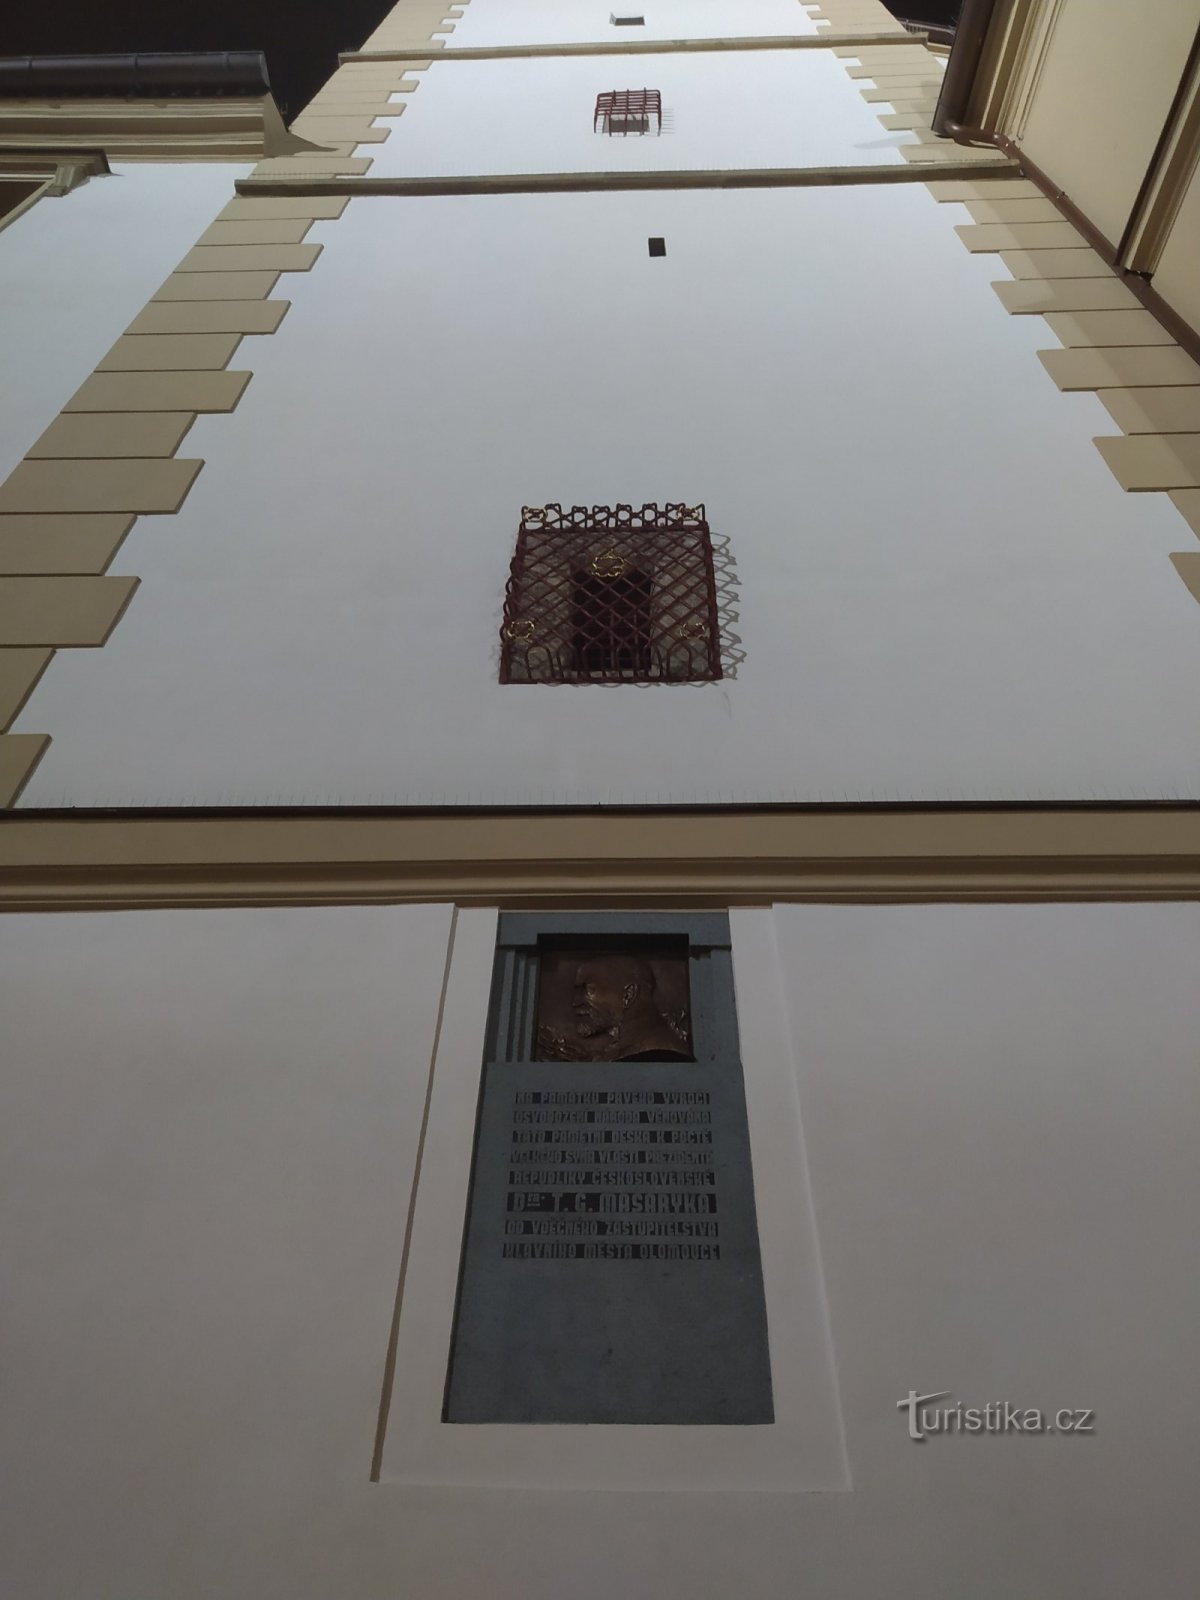 Town hall, Masaryk memorial plaque